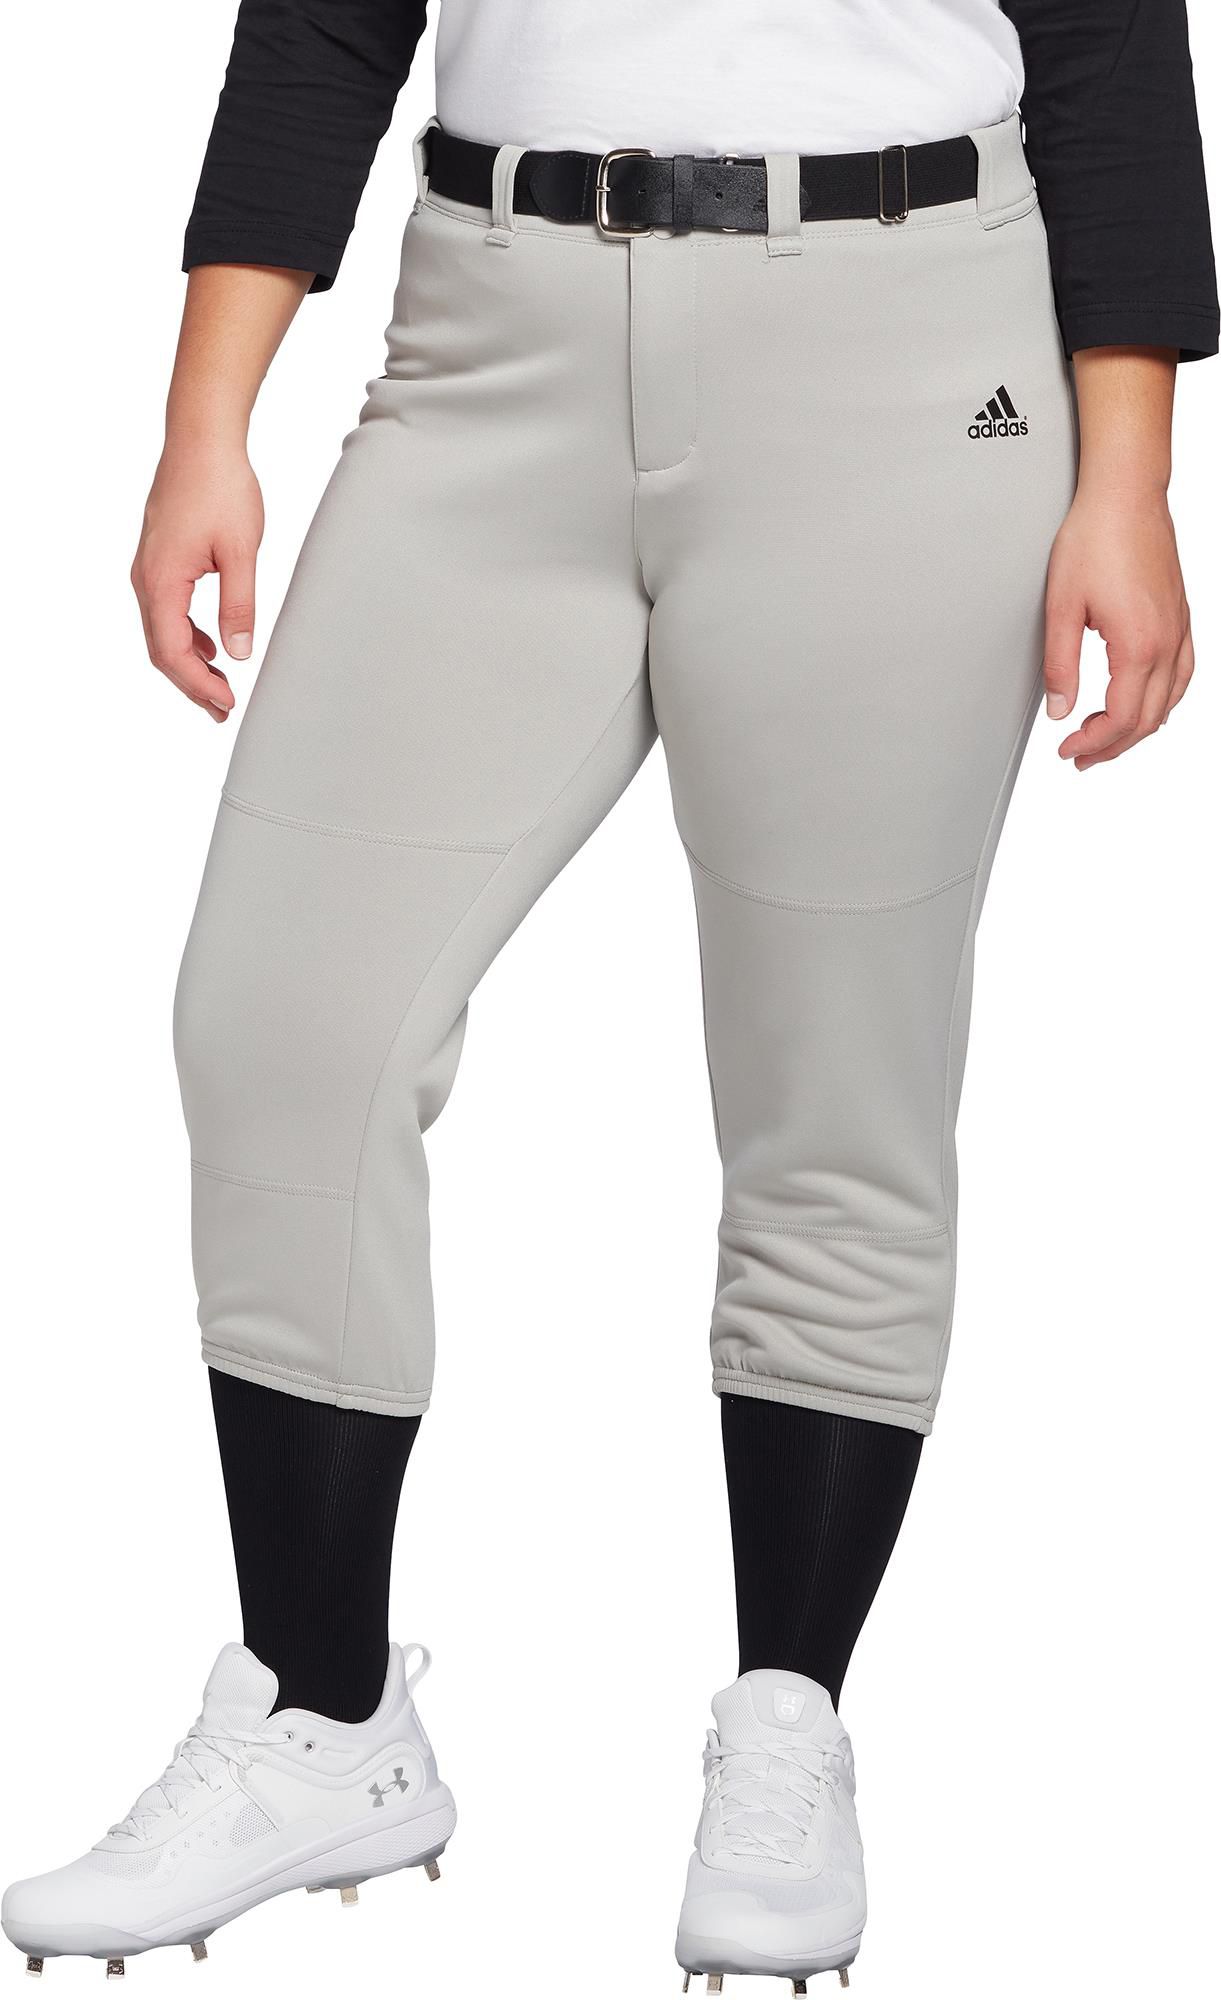 adidas white softball pants